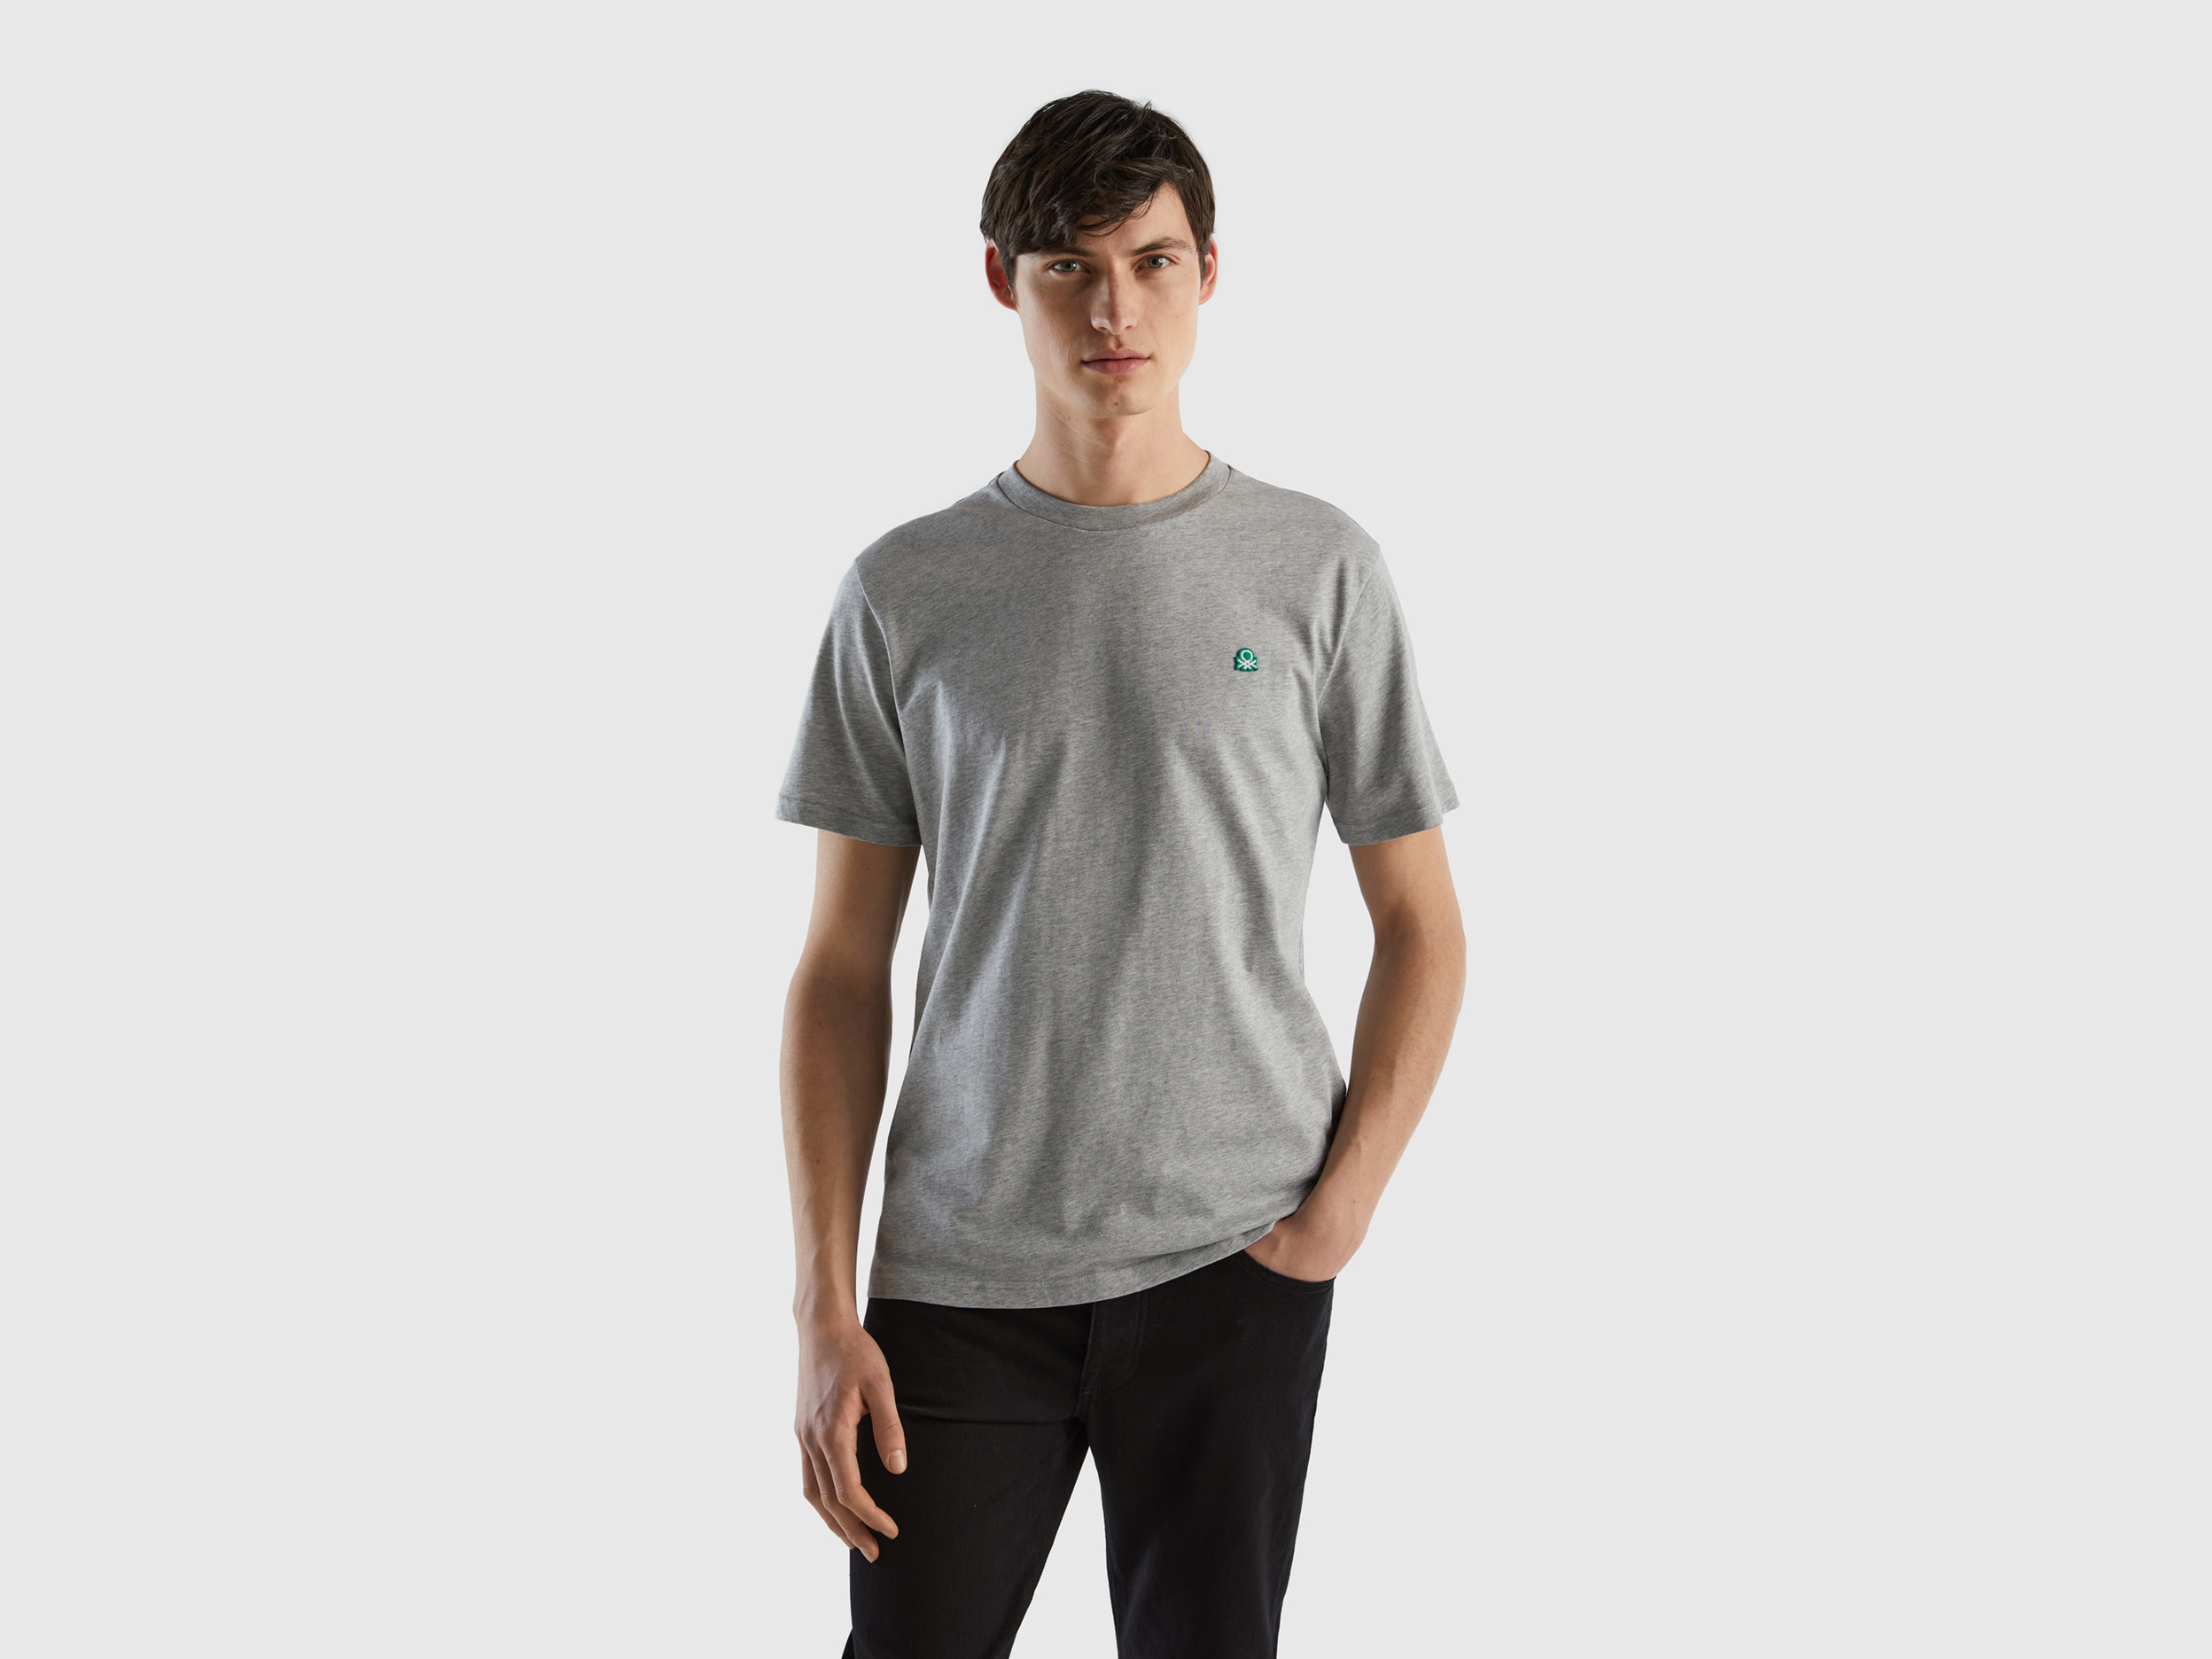 Image of Benetton, 100% Organic Cotton Basic T-shirt, size M, Light Gray, Men